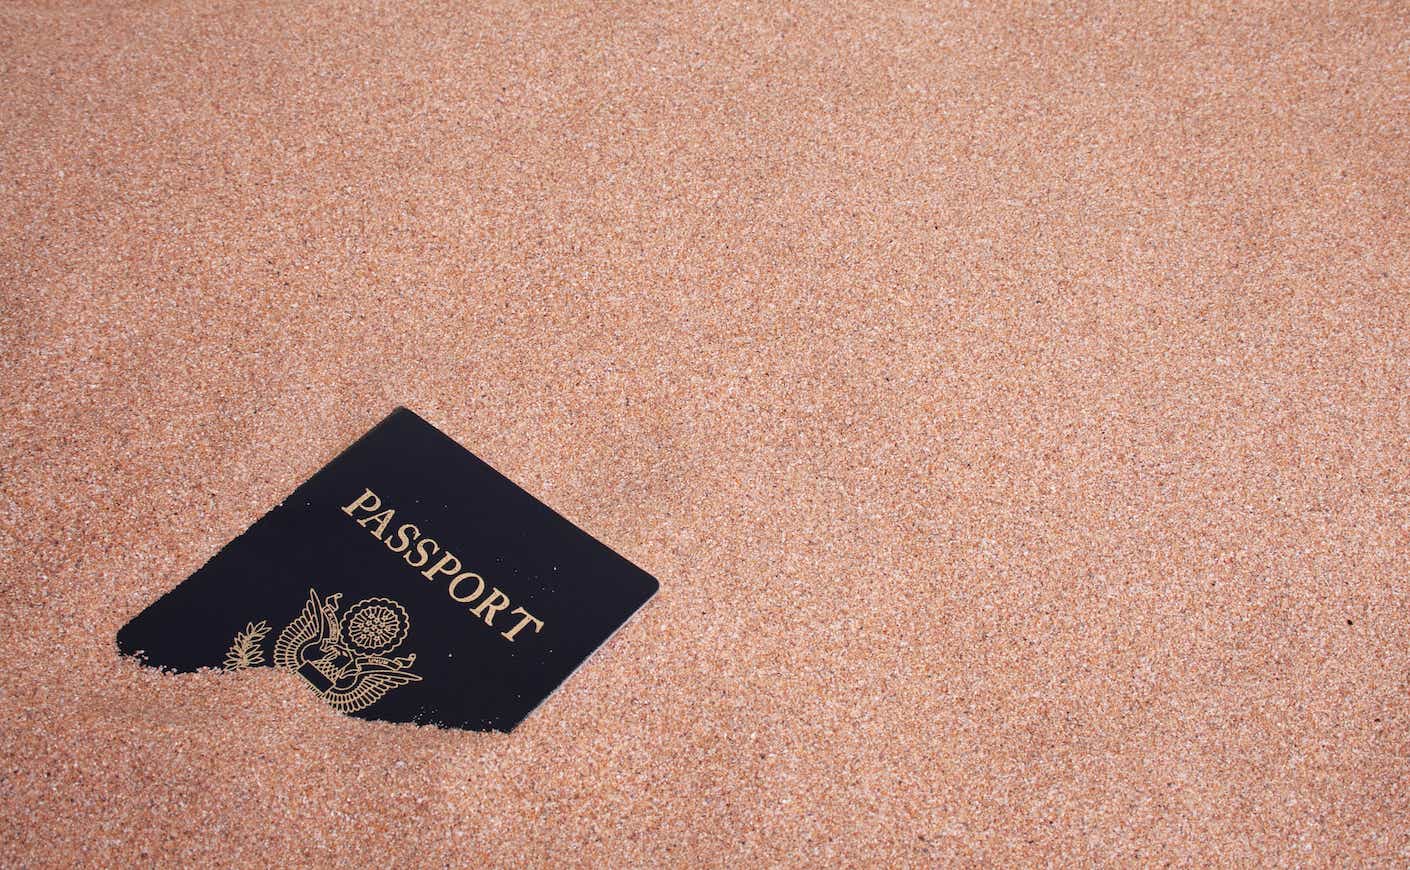 a U.S. passport buried in the sand